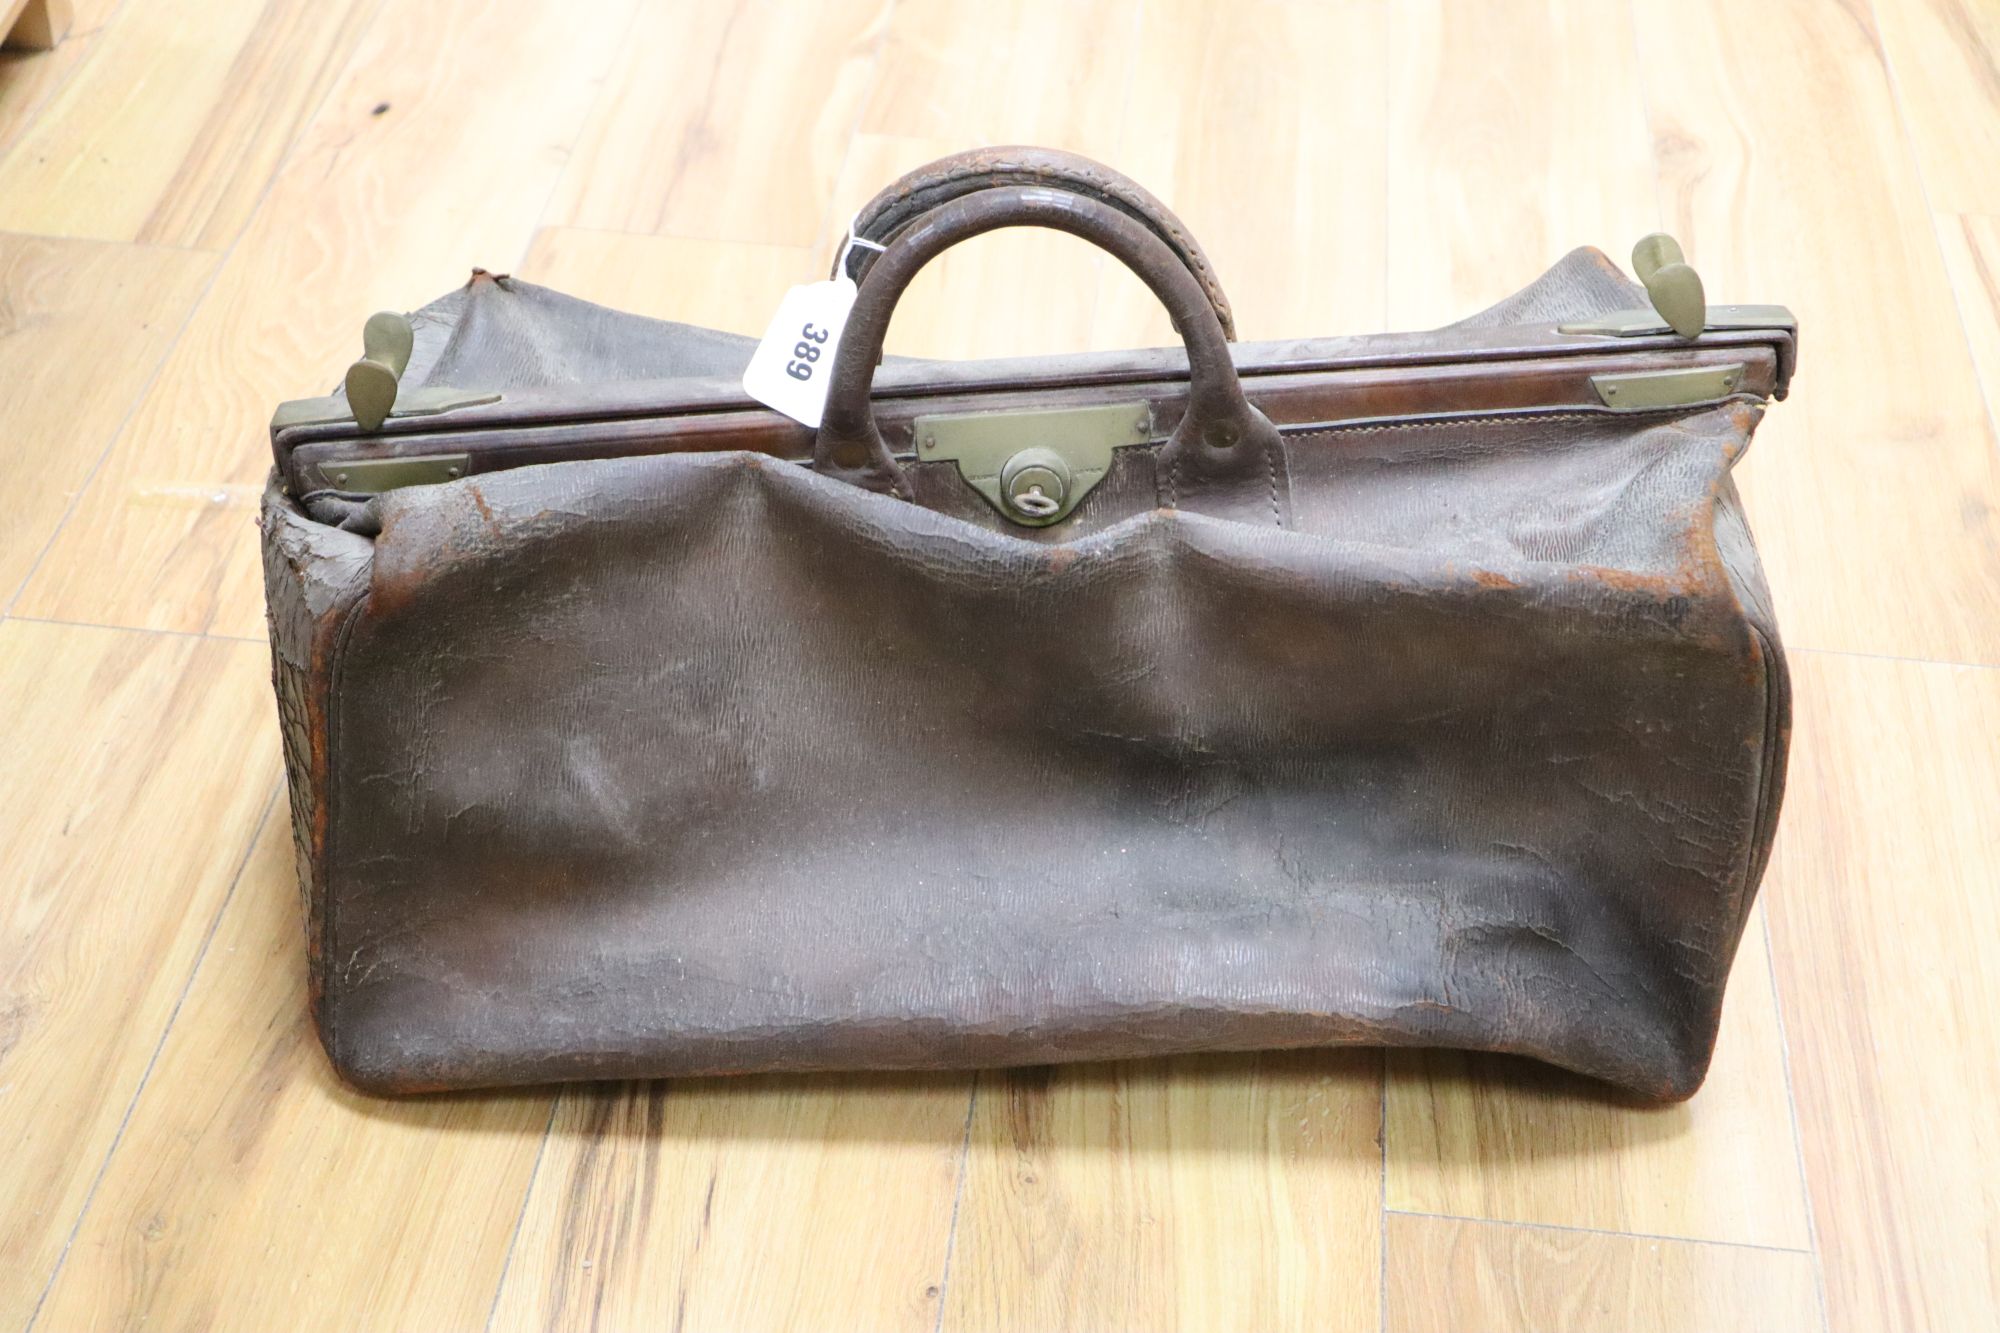 A Gladstone leather bag